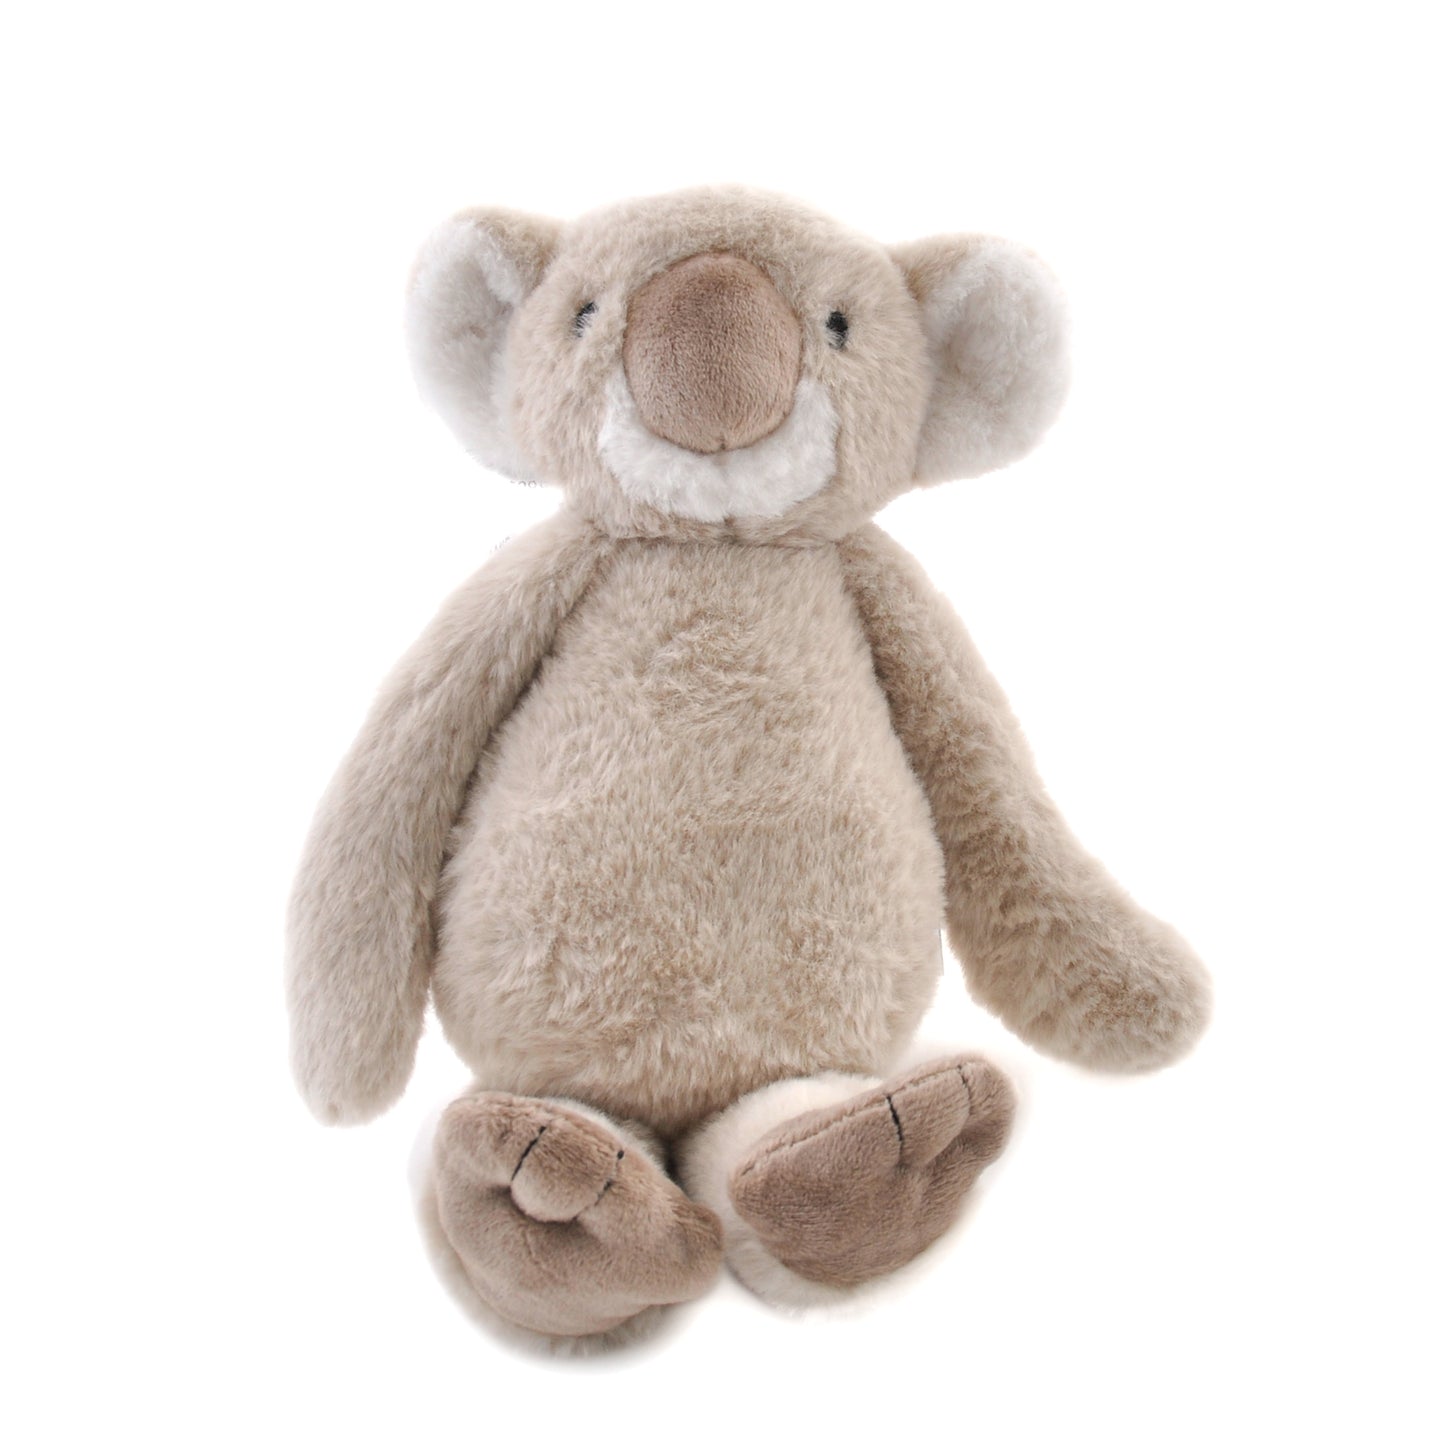 Baby Plush Toy - Koala